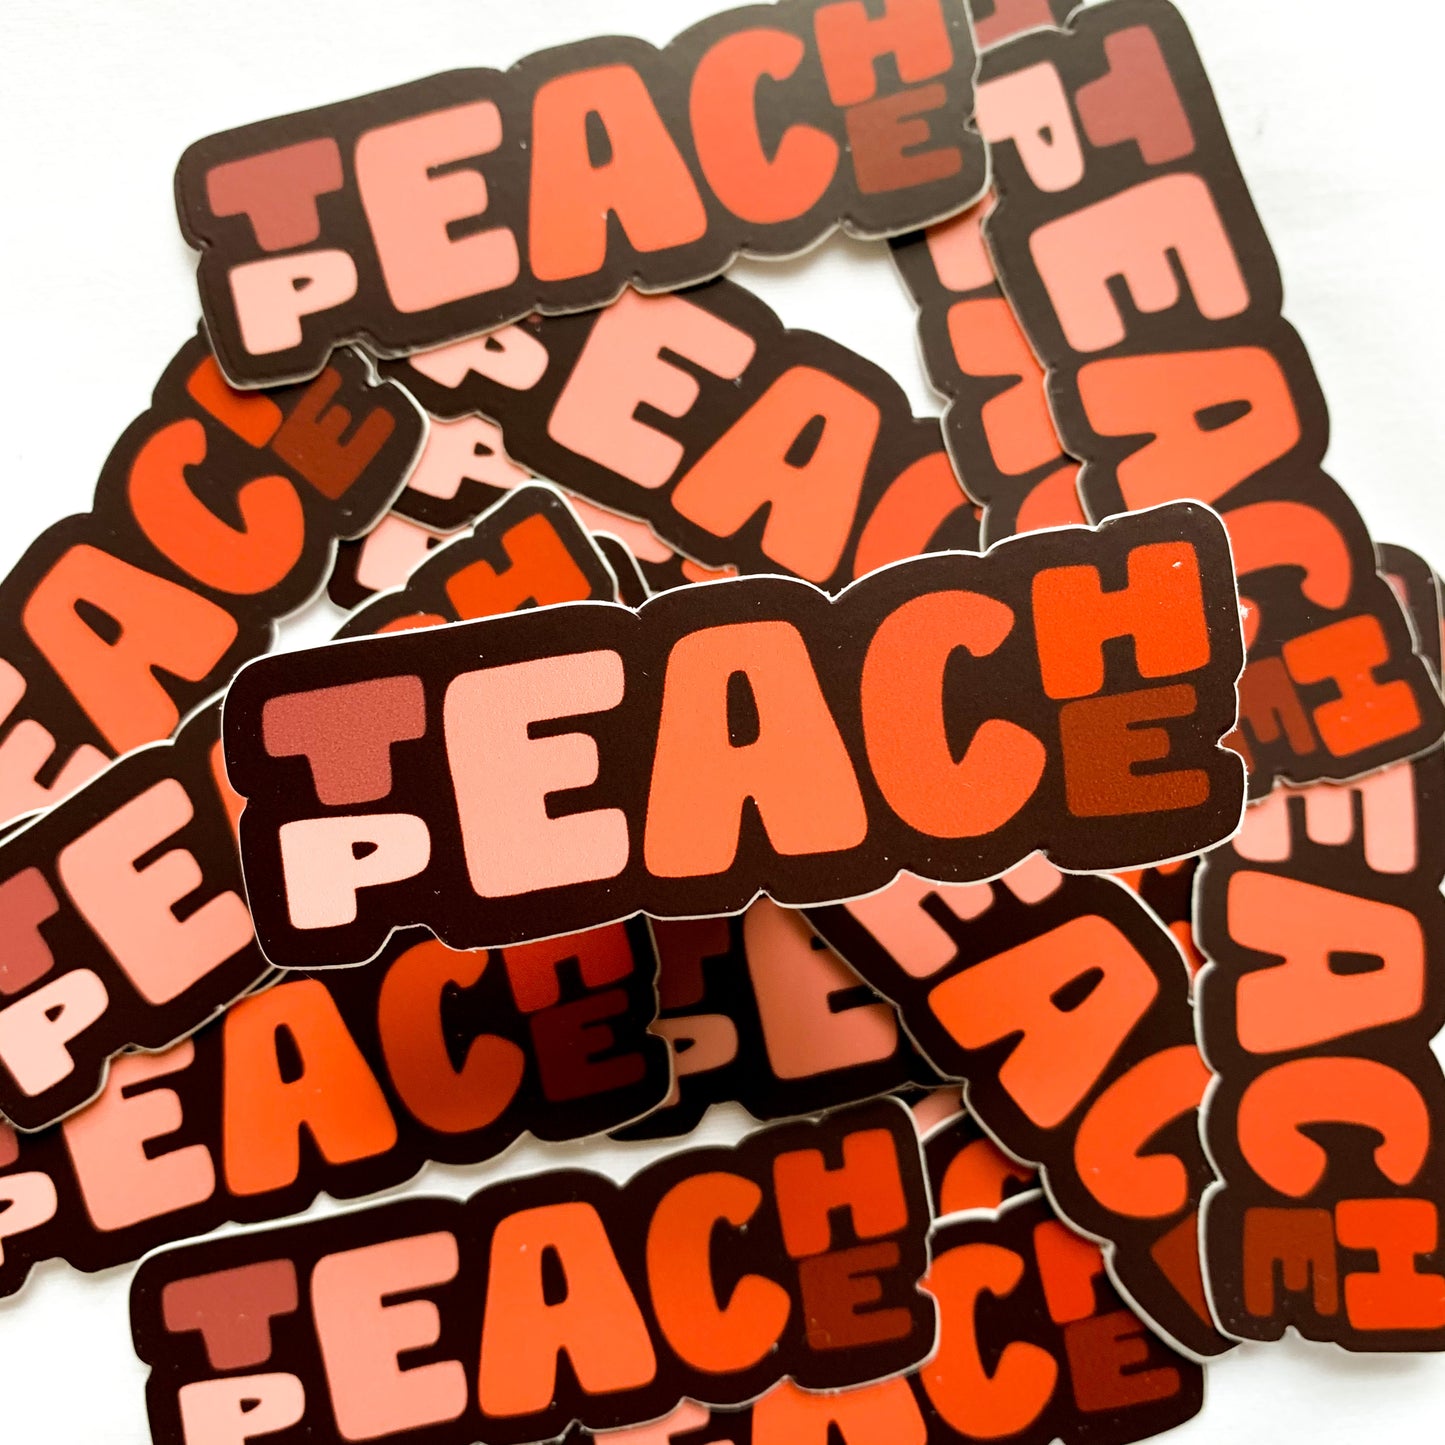 teach peace sticker